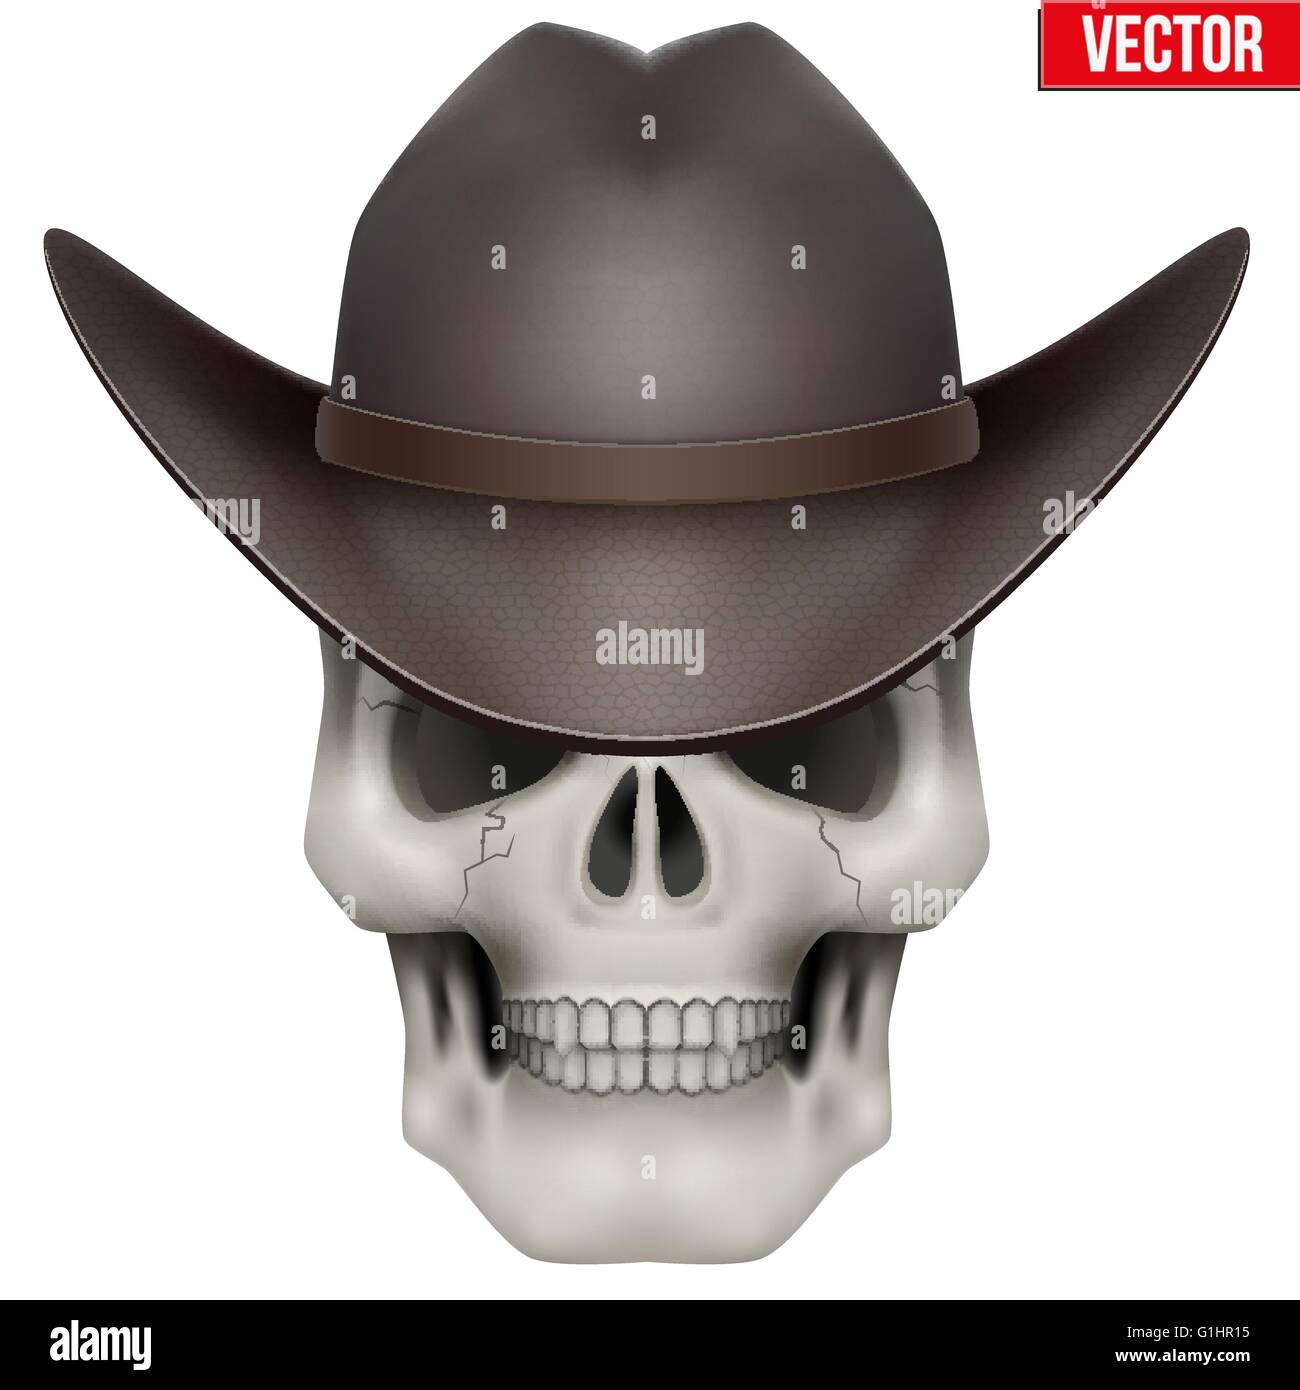 Vector Human skull with cowboy hat on head Stock Vector